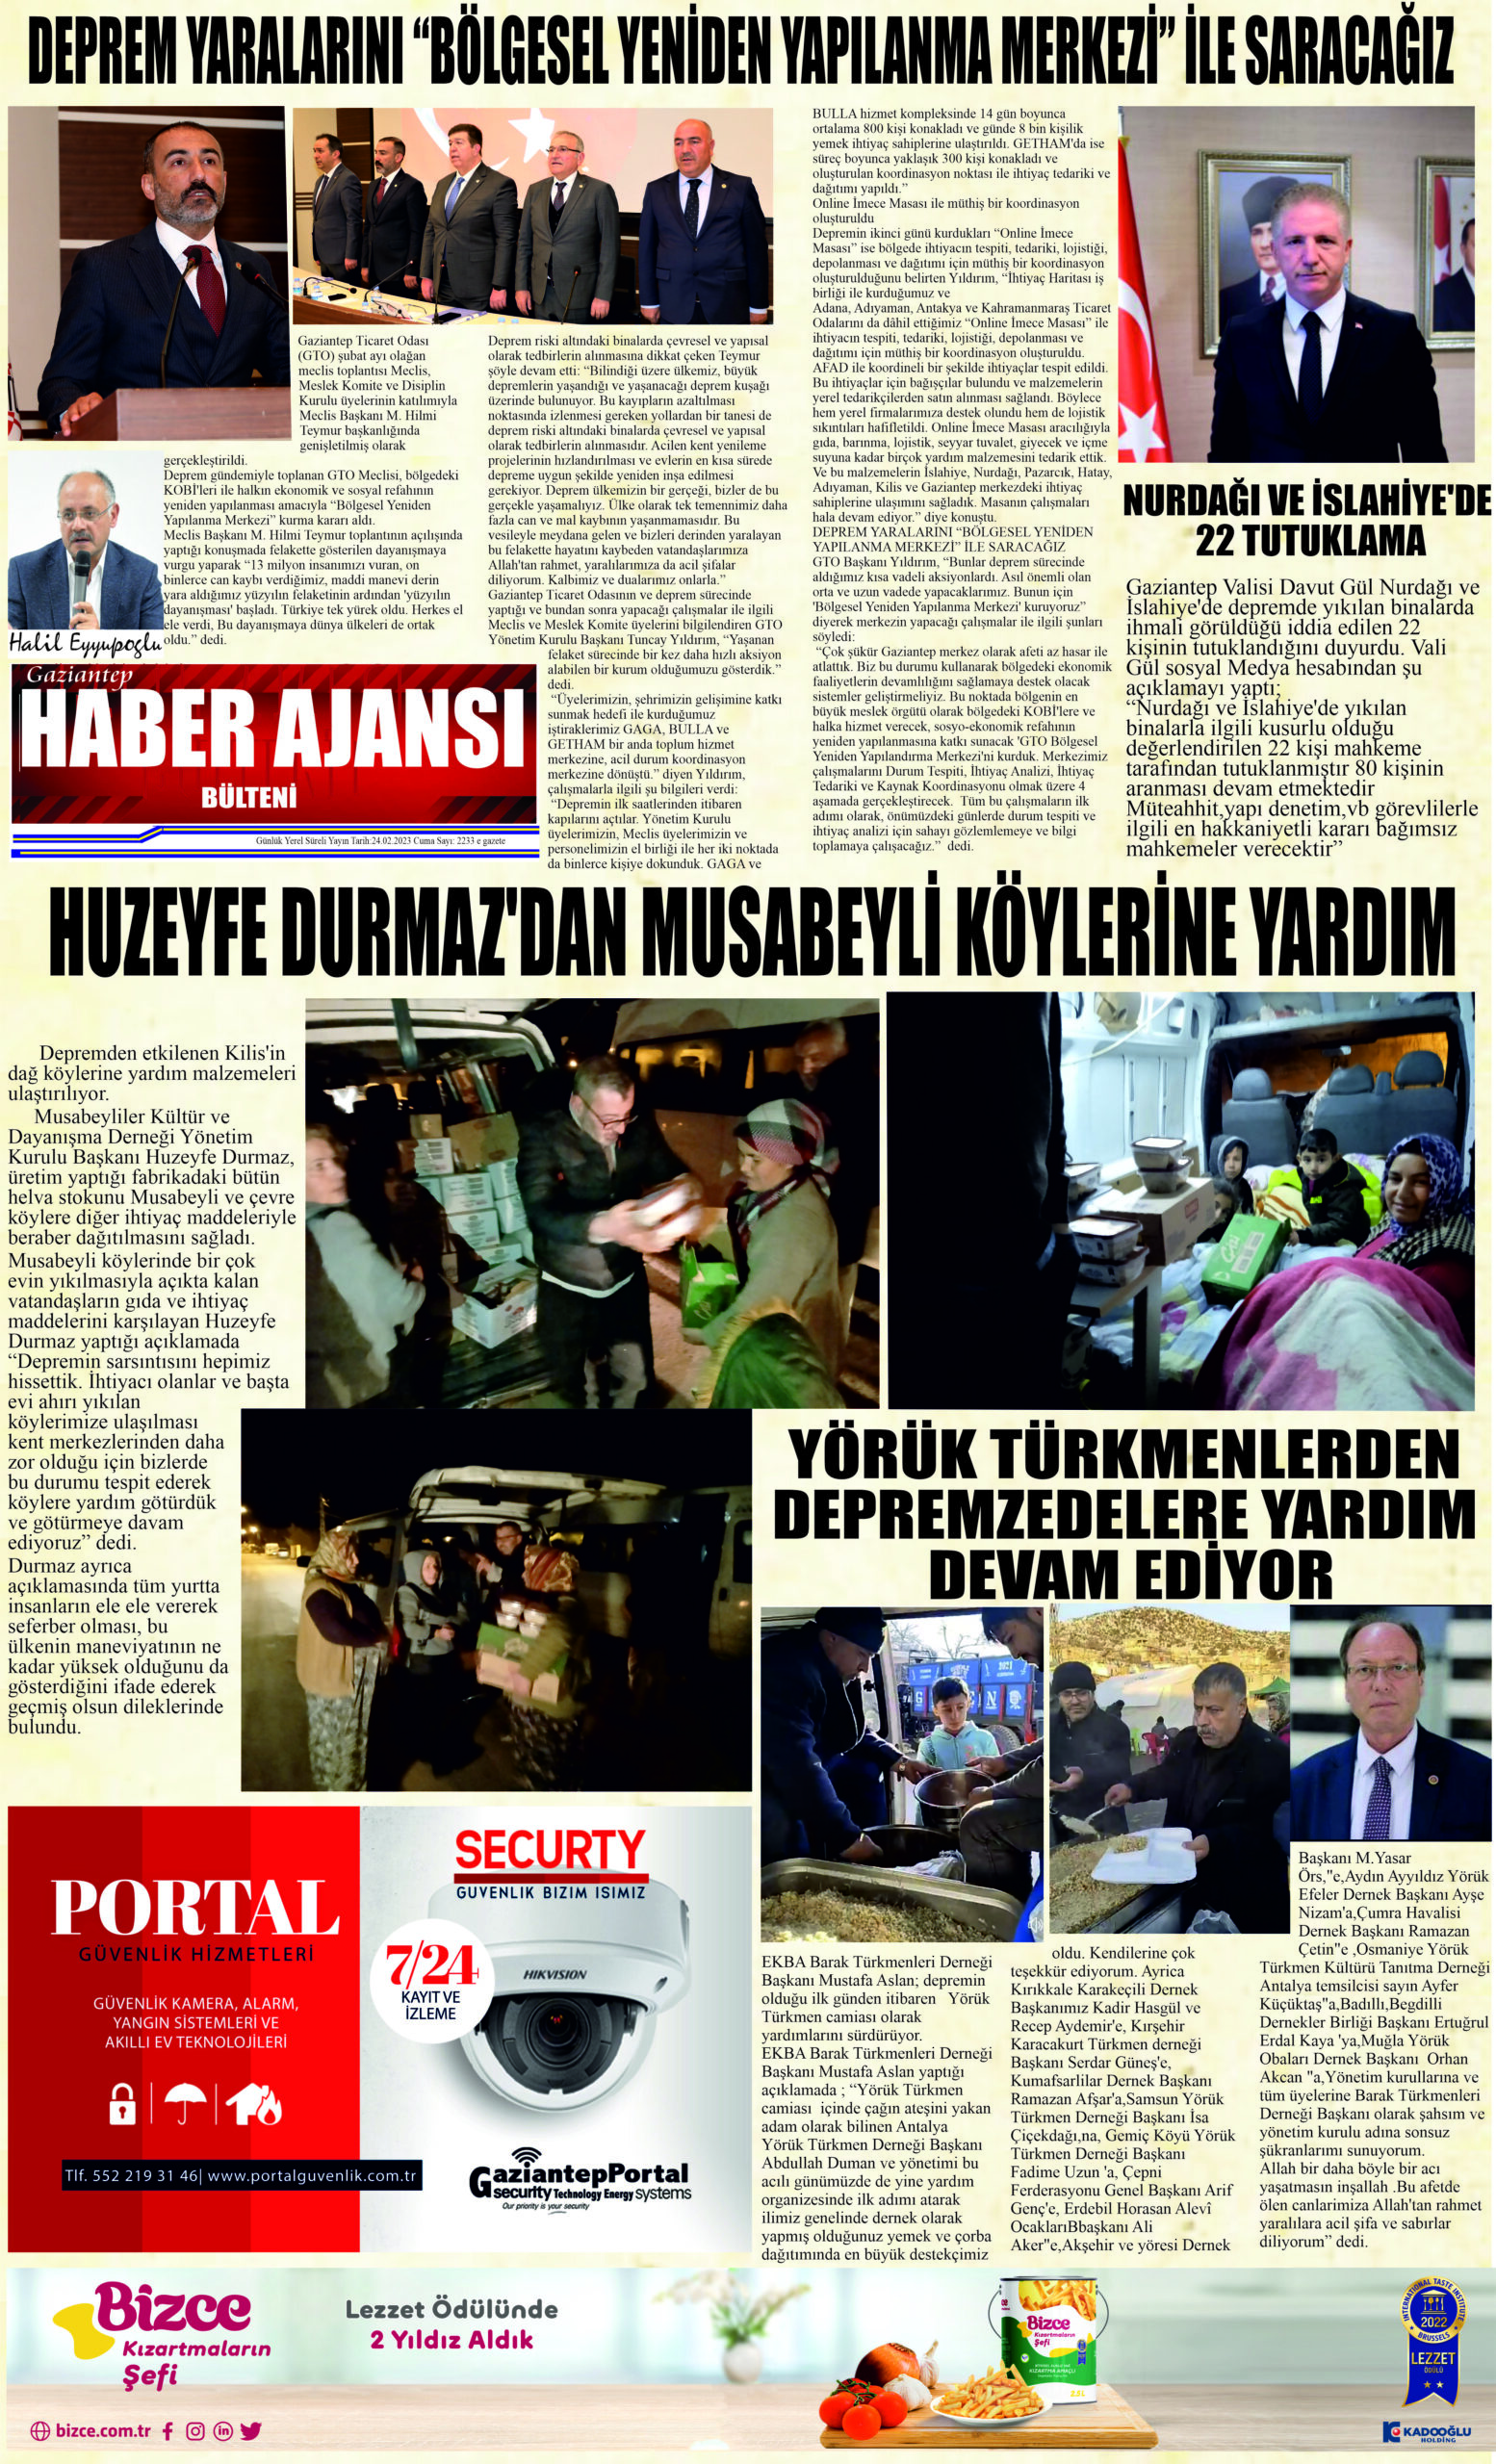 Gaziantep Haber Ajansı Bülteni Cuma 24.02.2023 e gazete